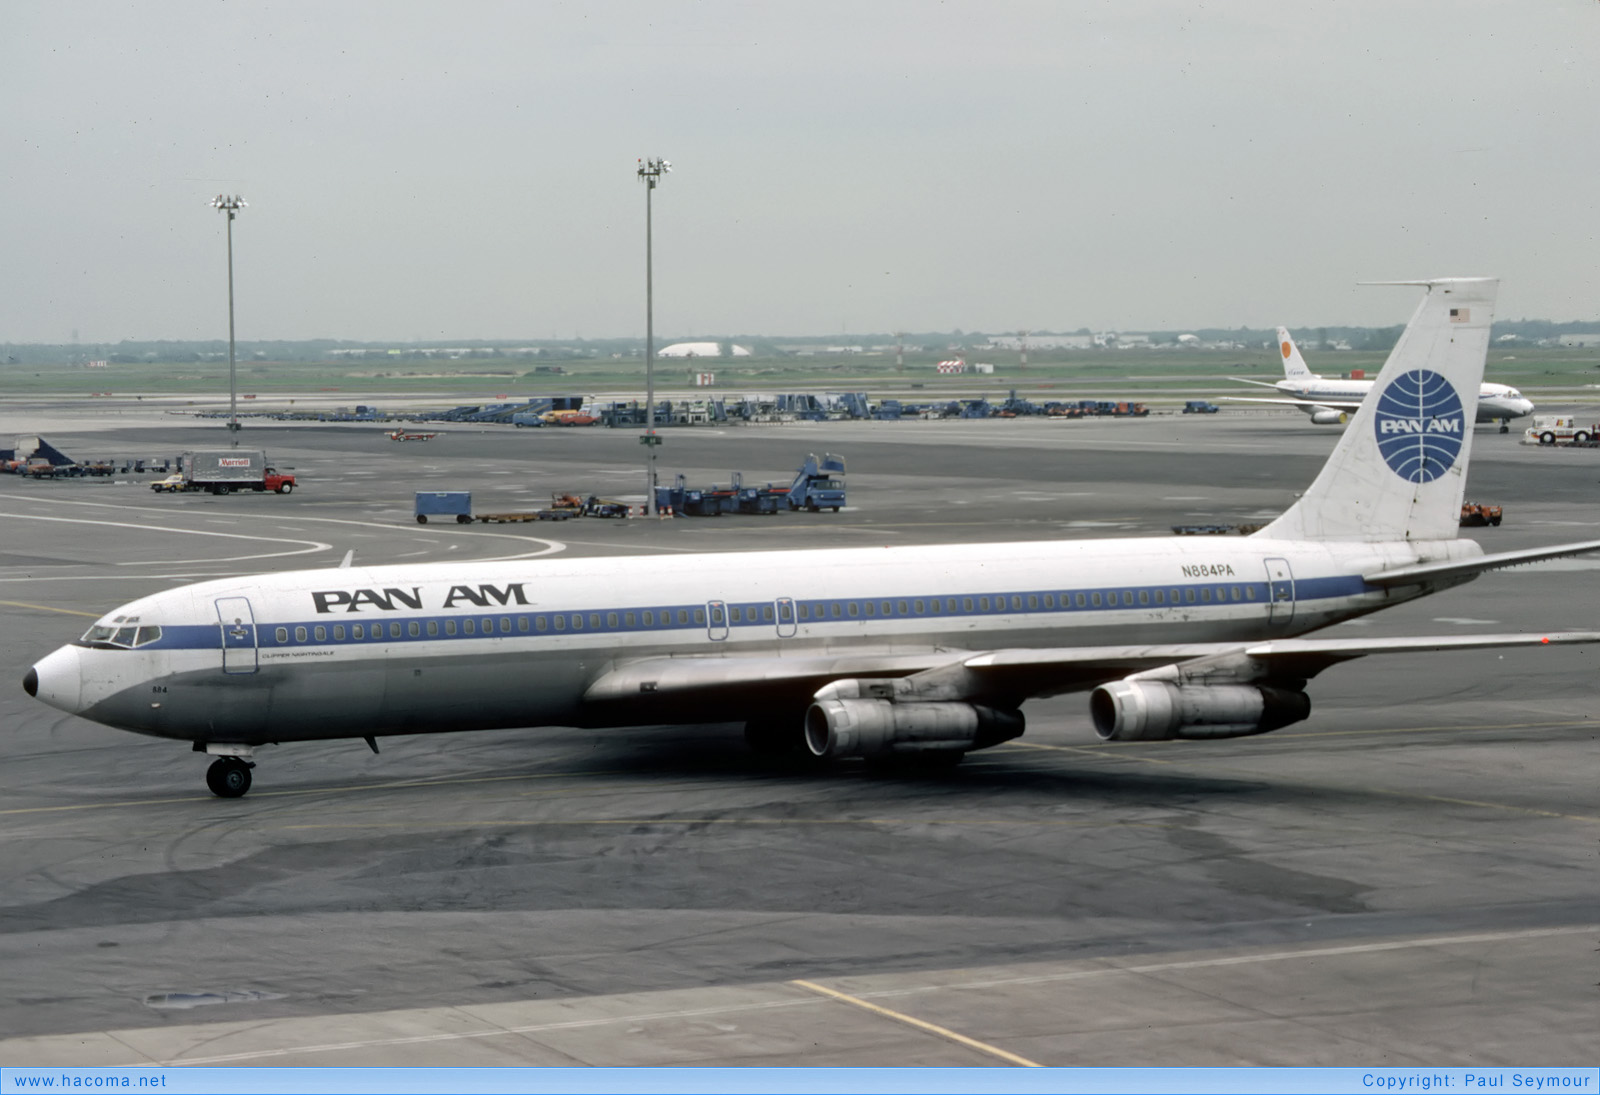 Photo of N884PA - Pan Am Clipper Nightingale - John F. Kennedy International Airport - Aug 20, 1980